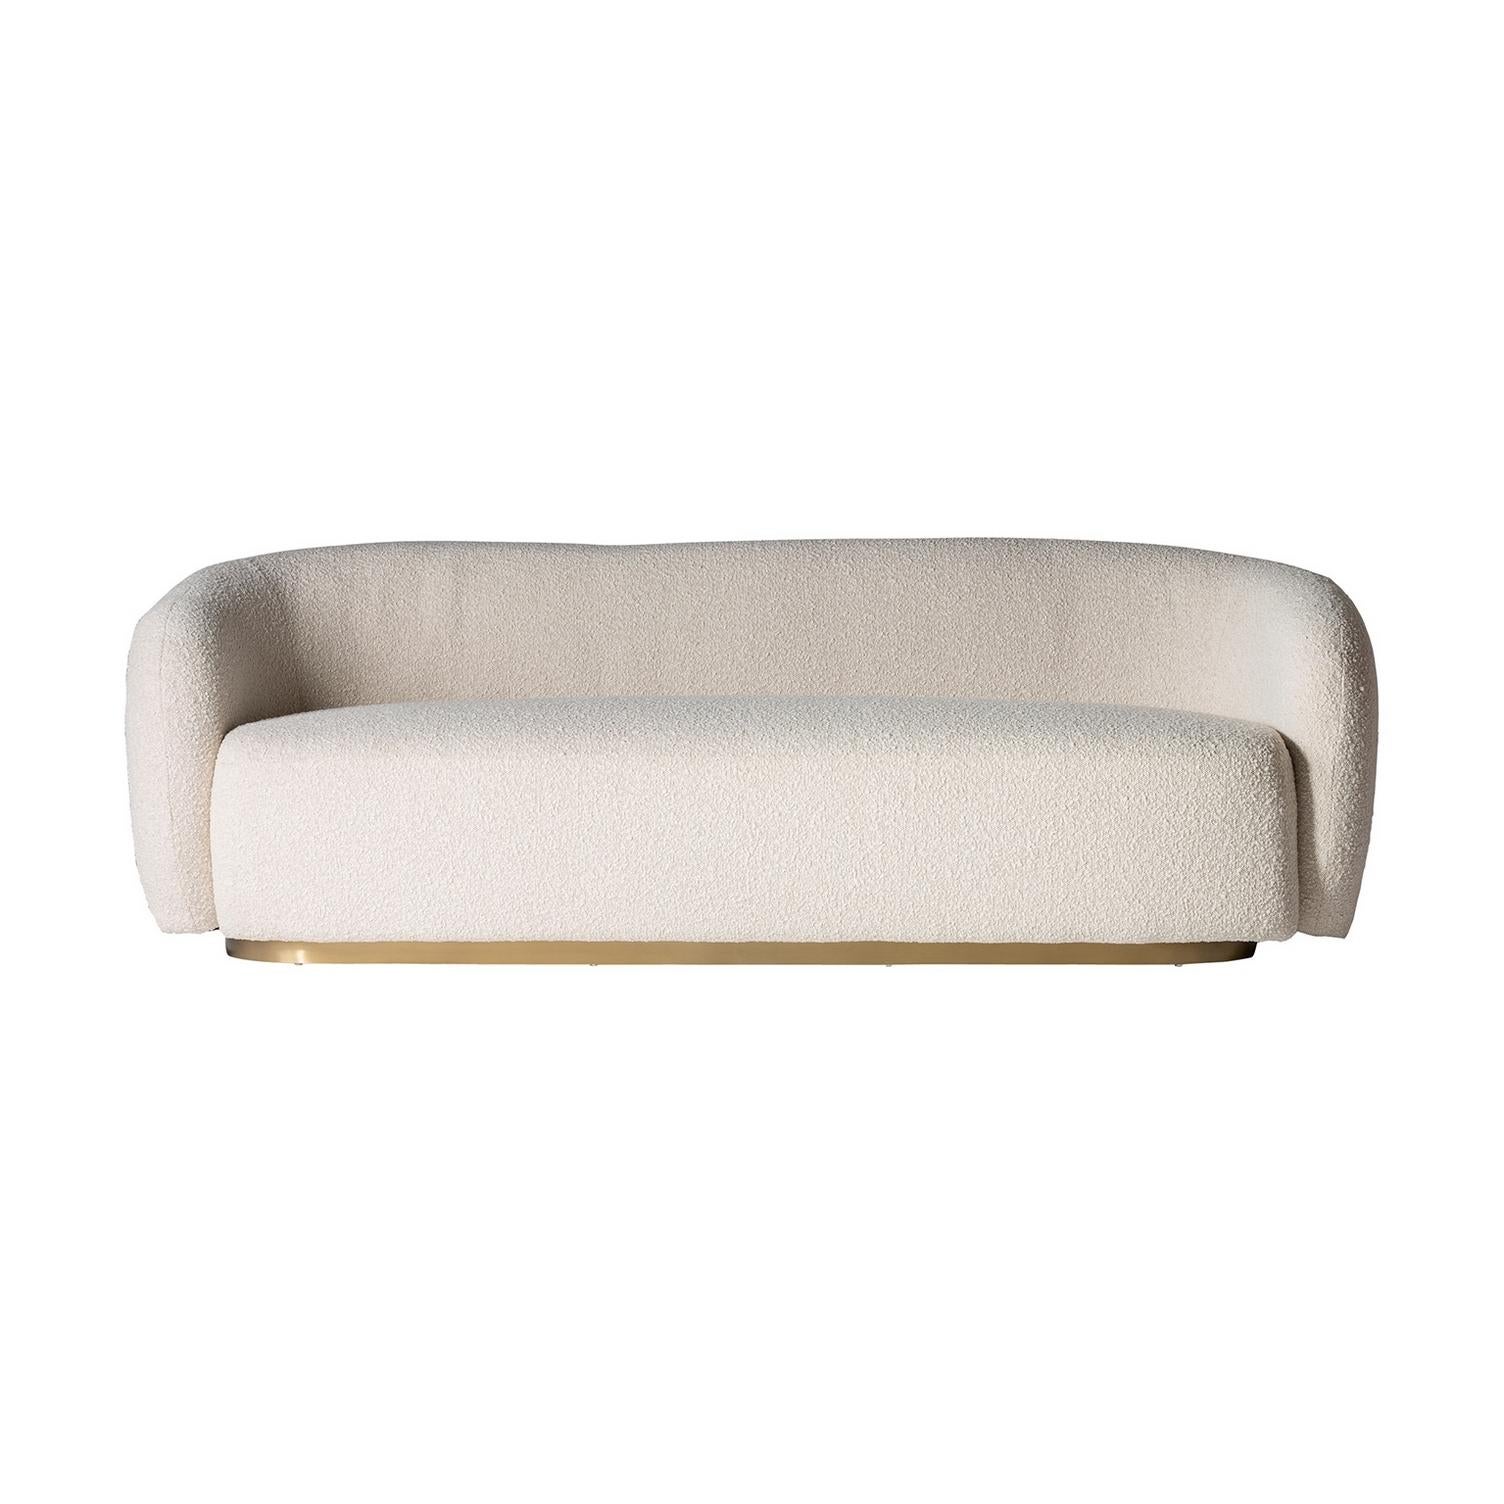 Mid-Century Modern Vintage Design Style Bouclé Fabric Sofa For Sale